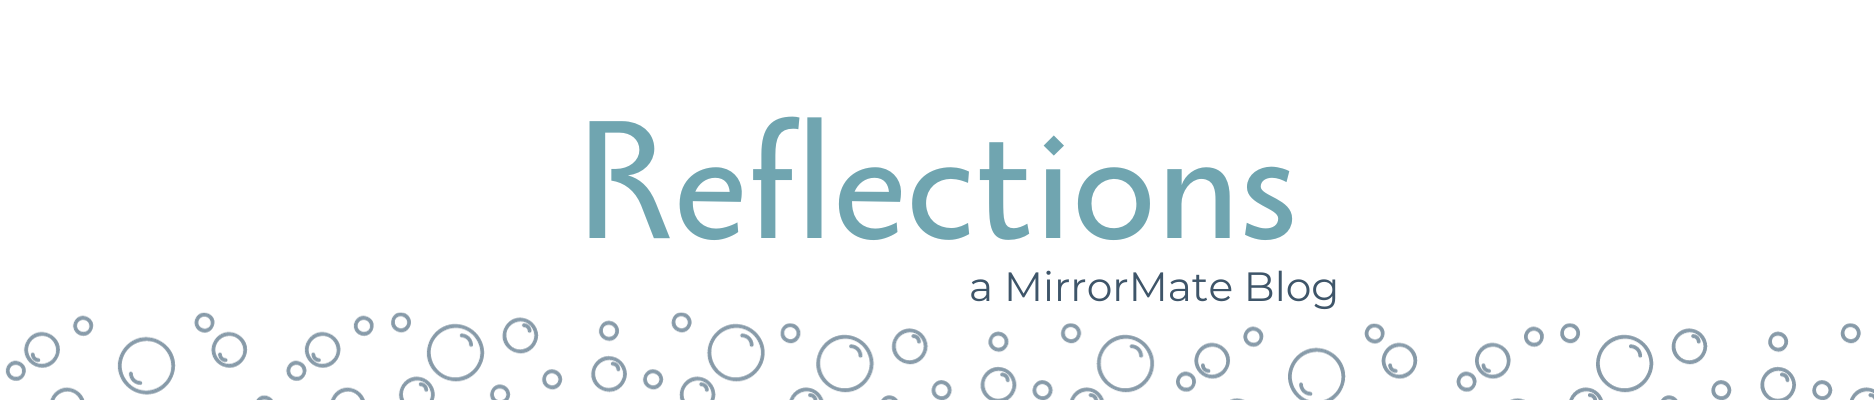 MirrorMate Reflections Blog Header